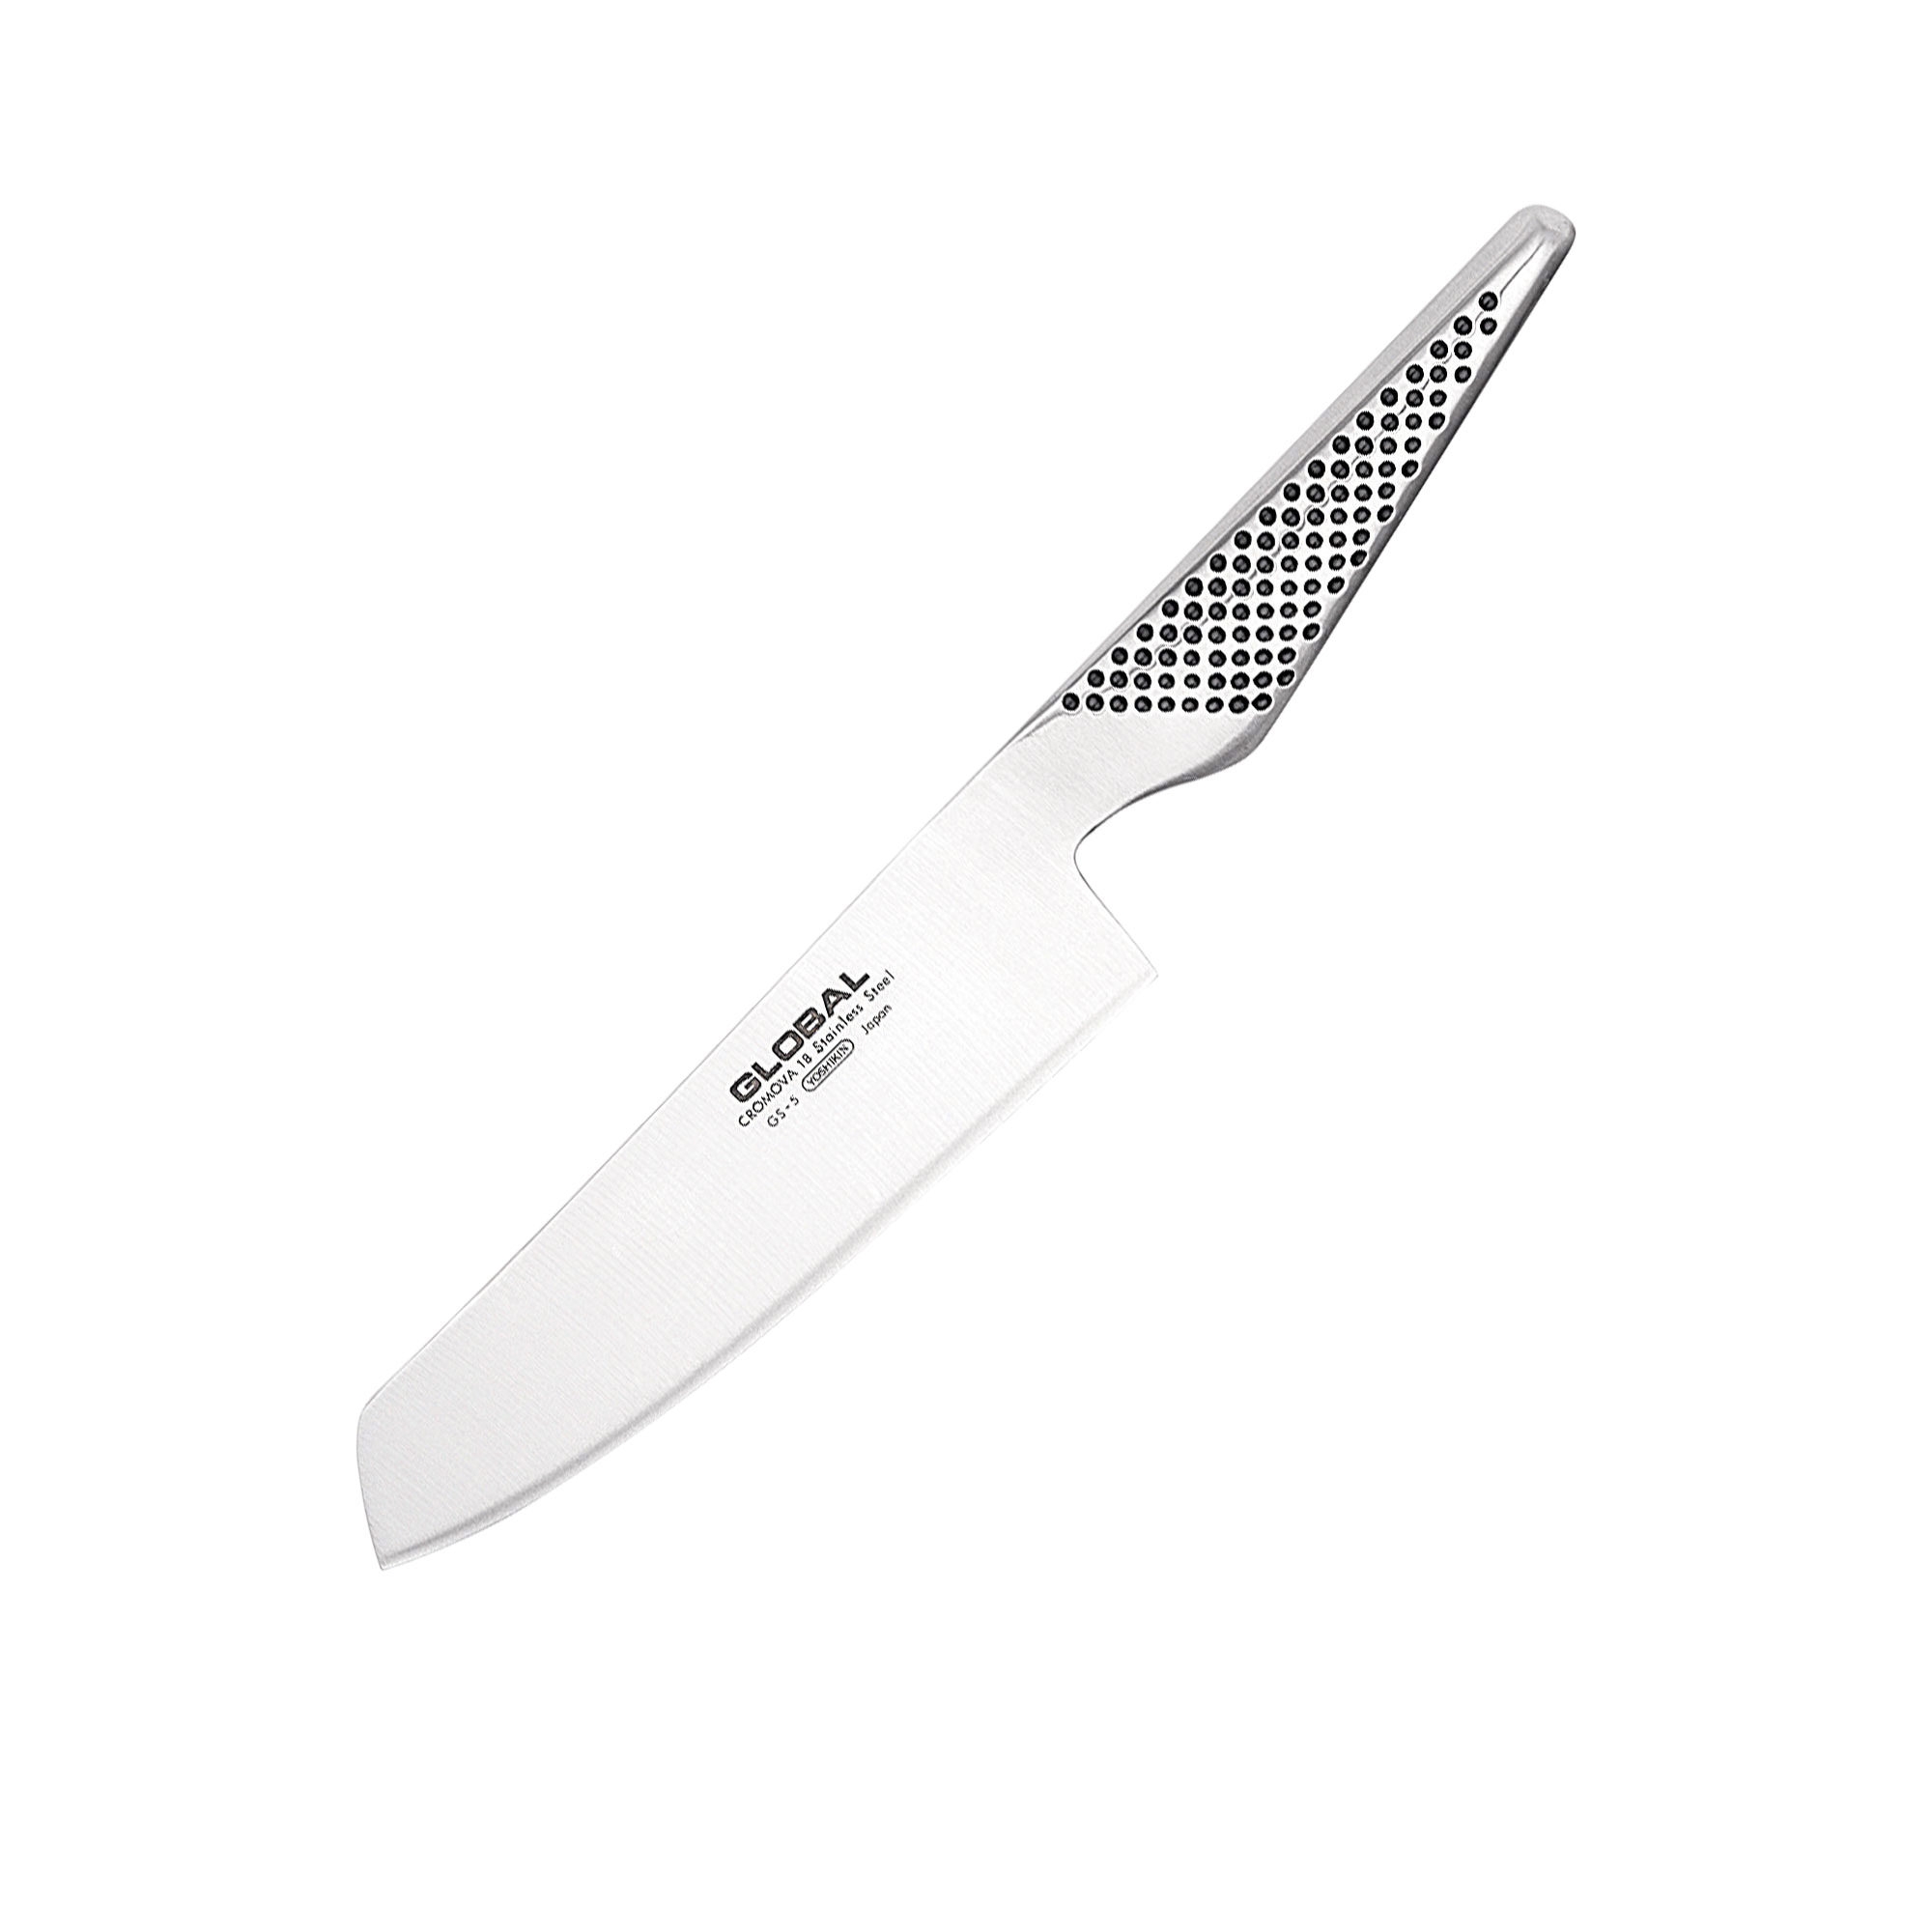 Global GS-5 Vegetable Knife 14cm Image 1